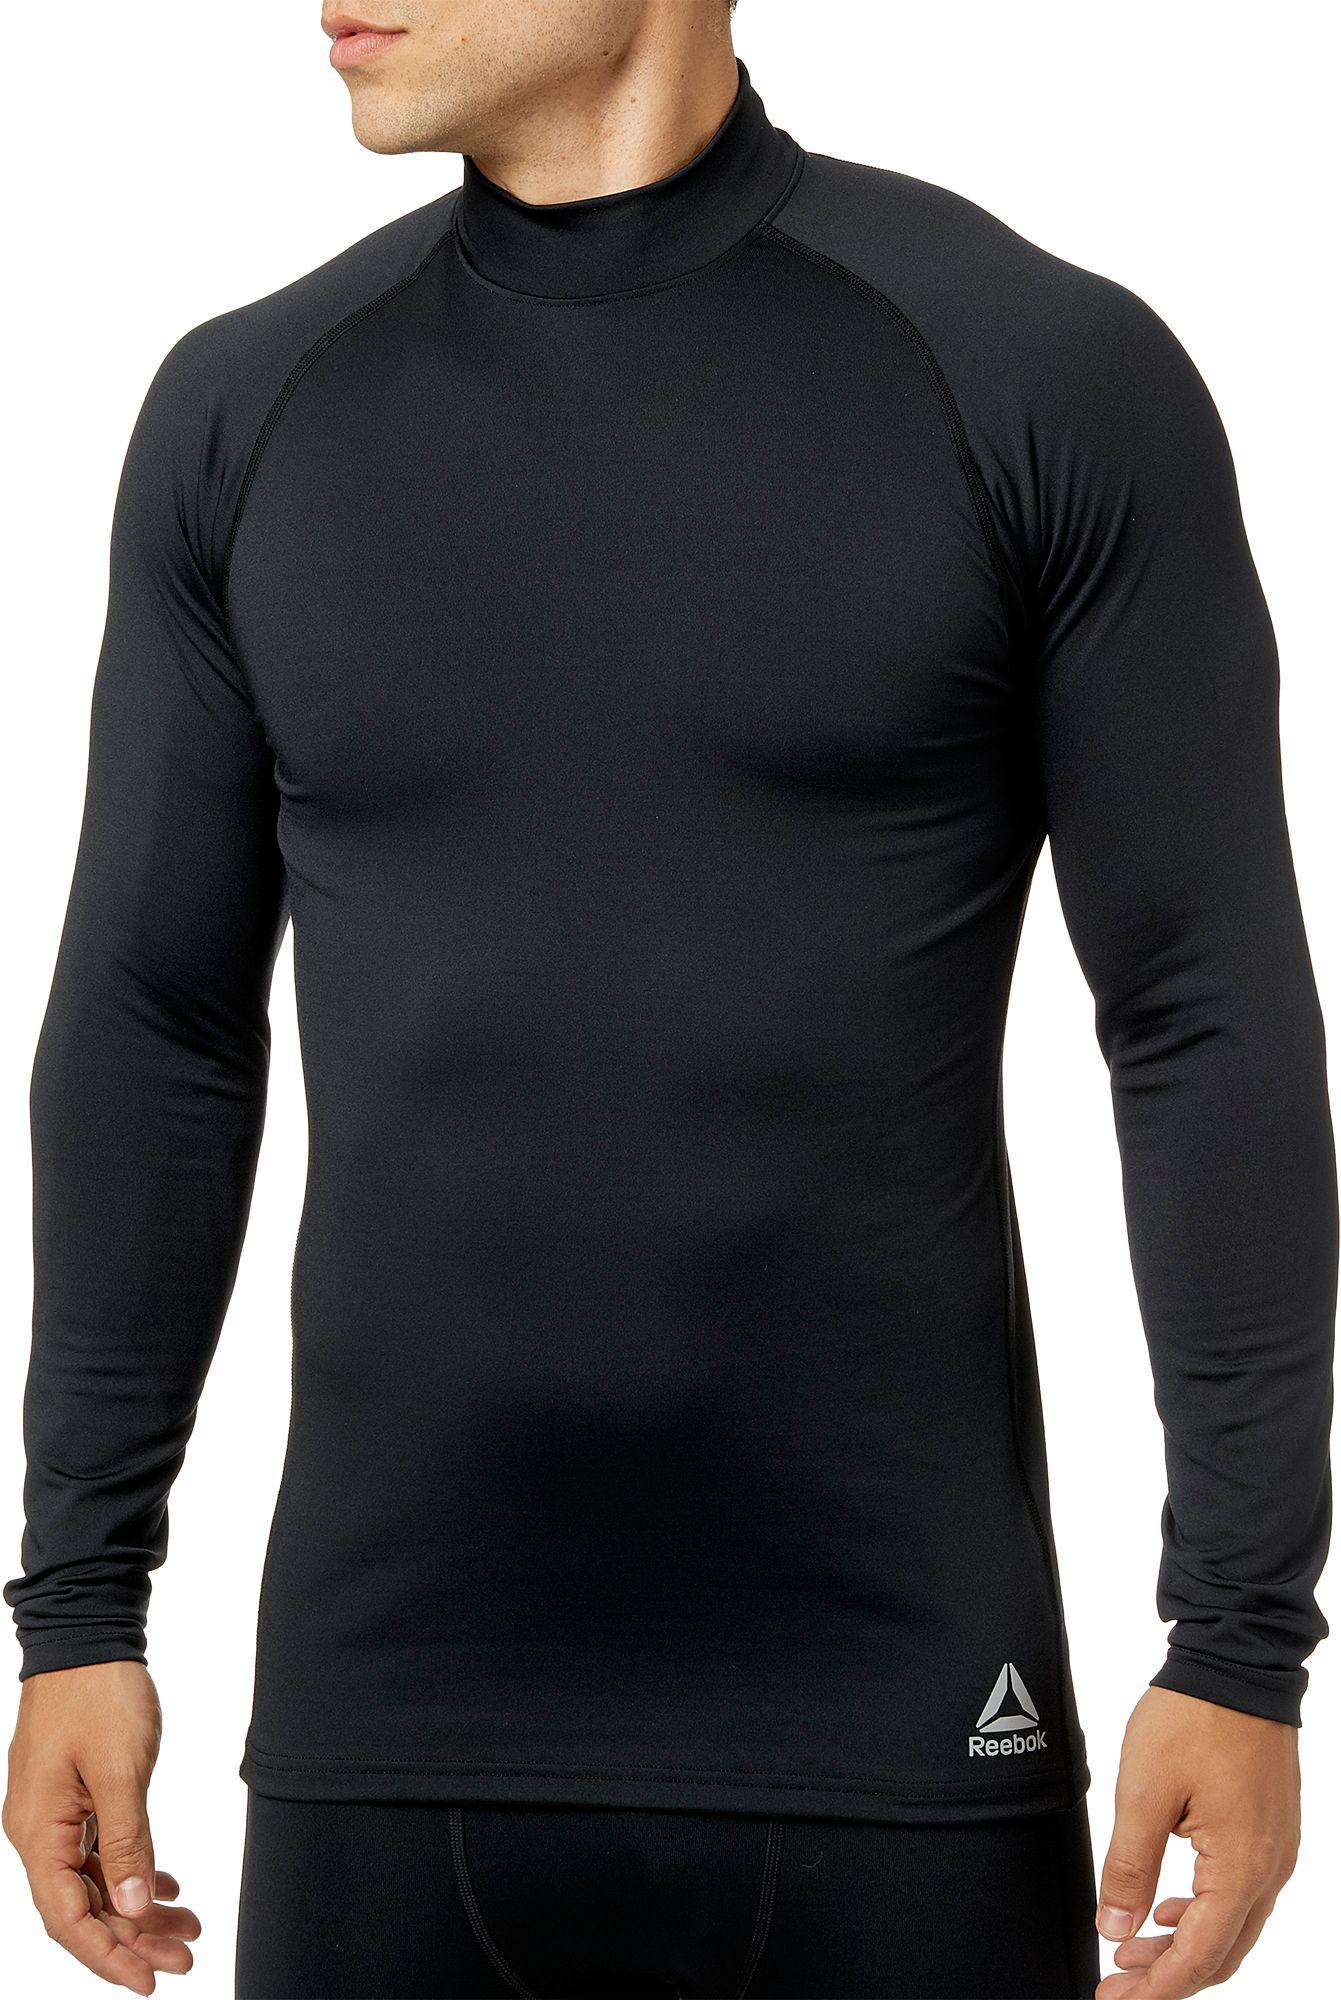 Reebok Fleece Cold Weather Compression Mock Neck Long Sleeve Shirt in ...